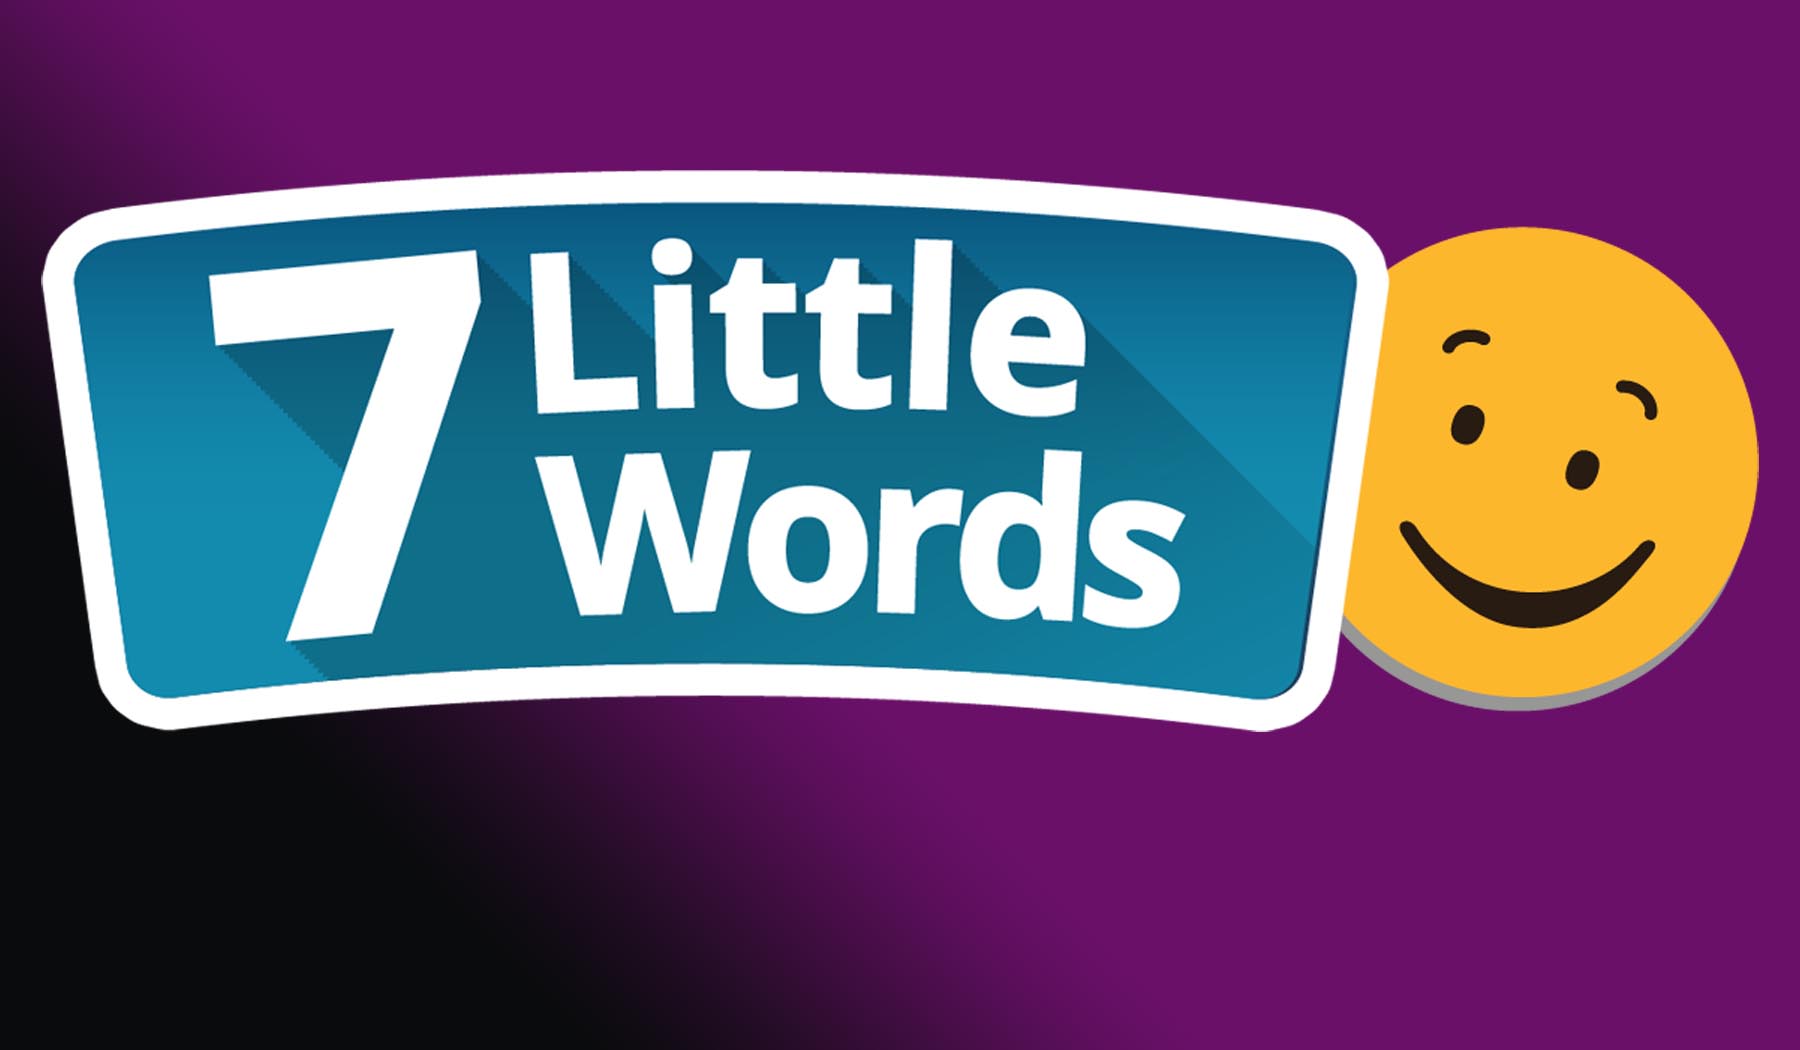 7 little words